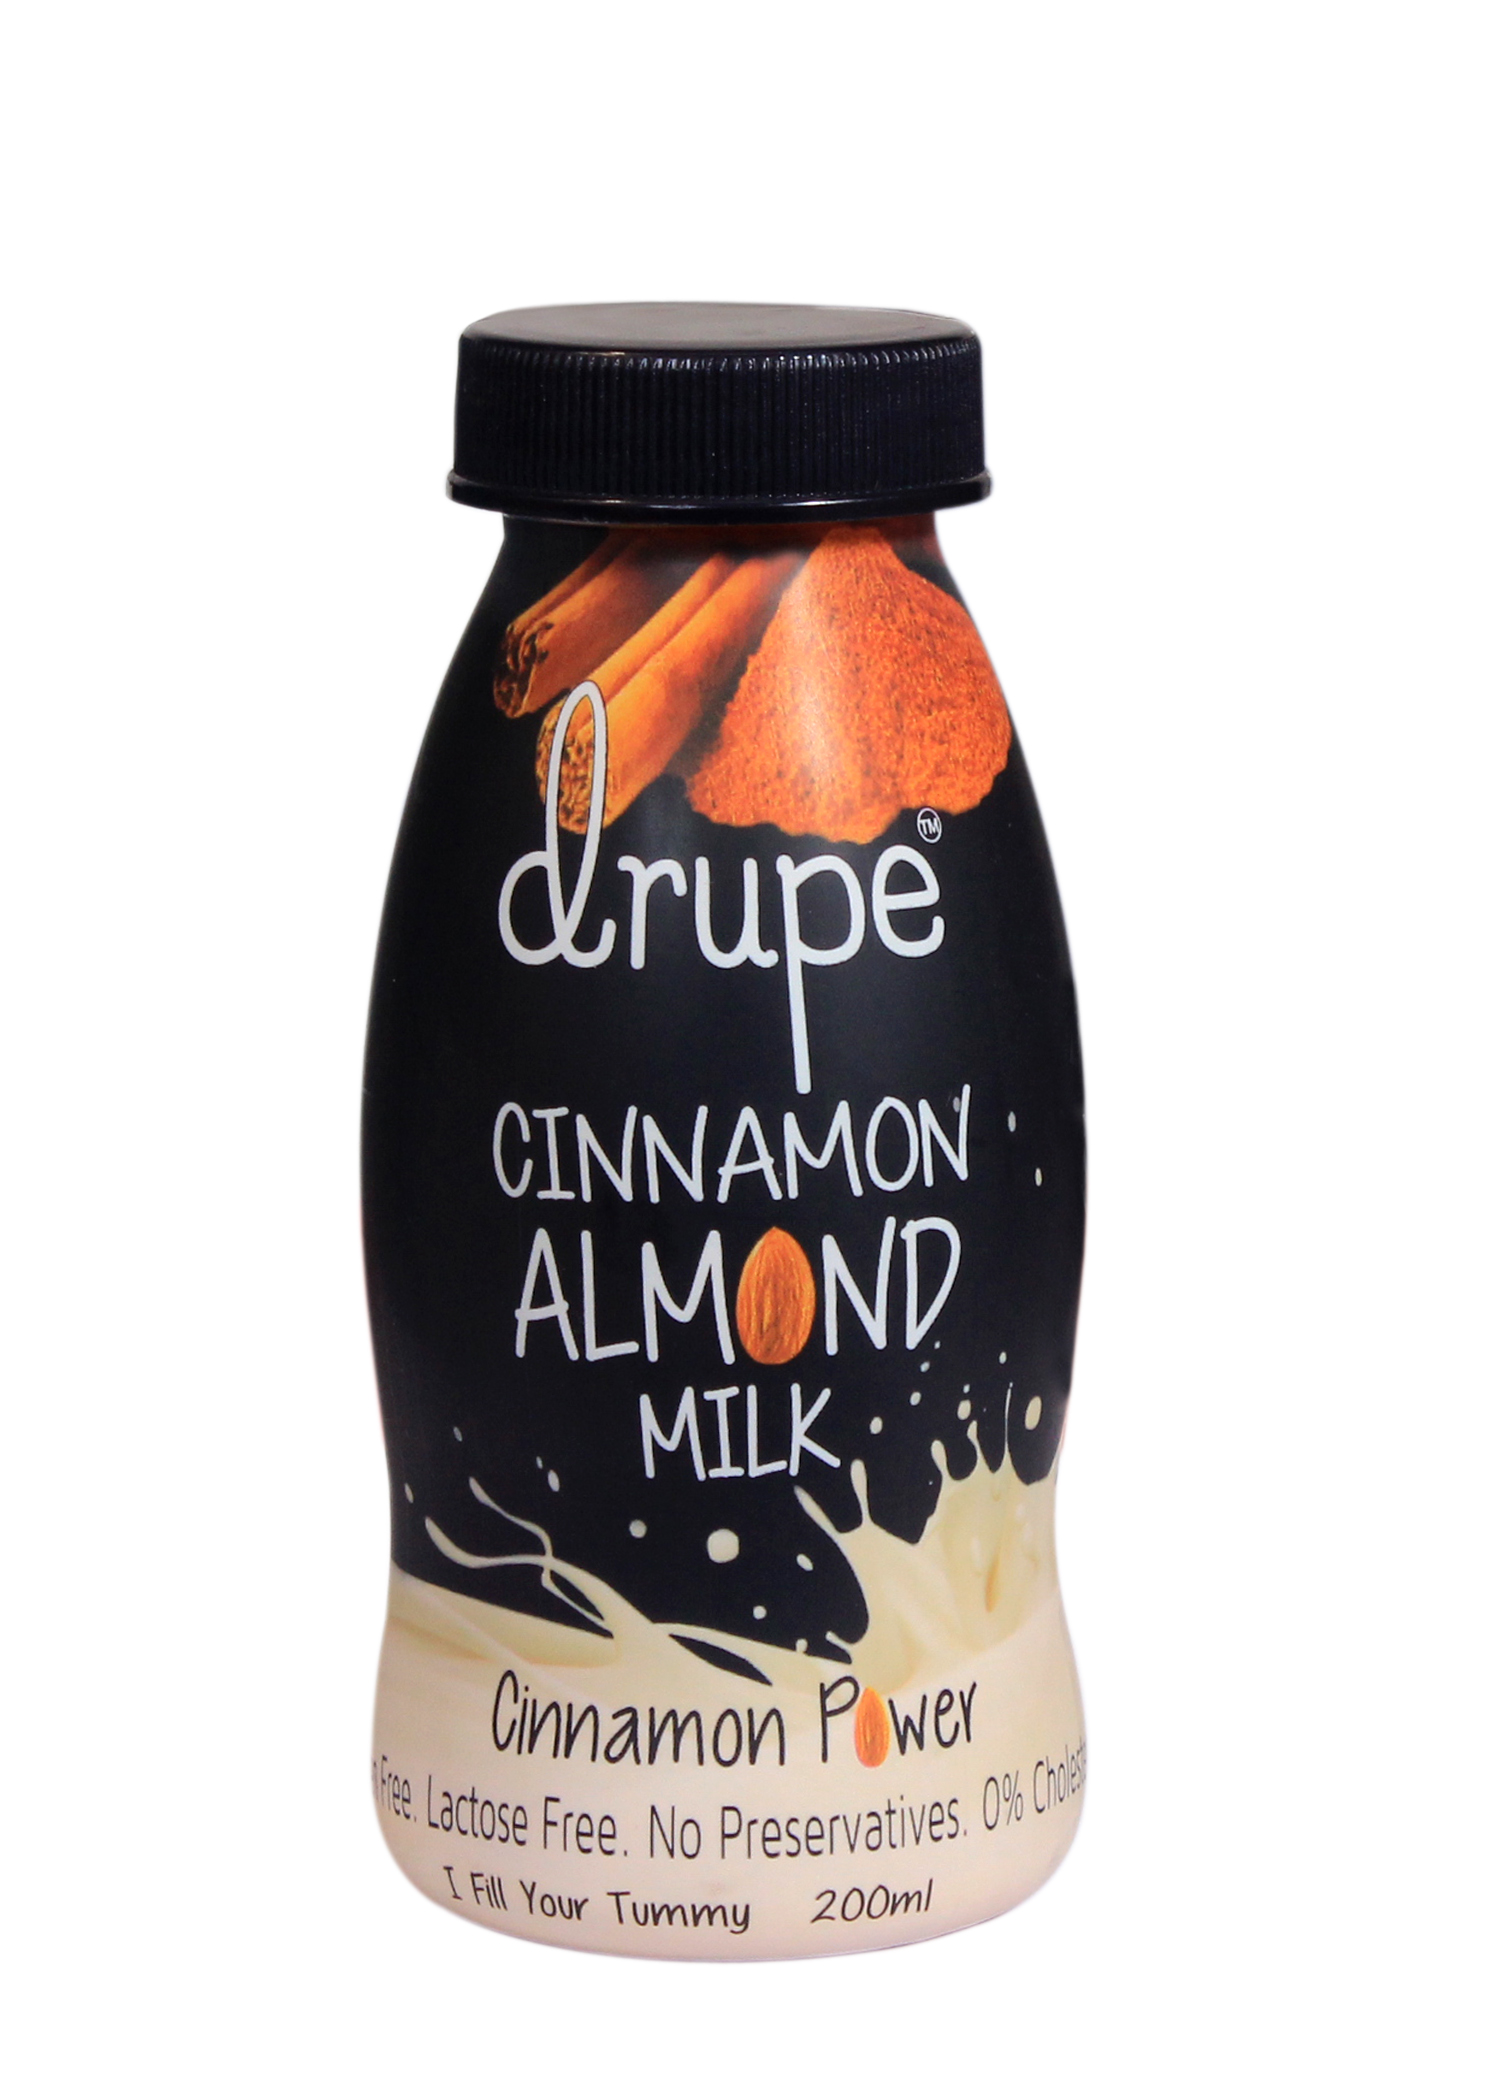 Drupe Cinnamon Power Almond Milk pack of 6